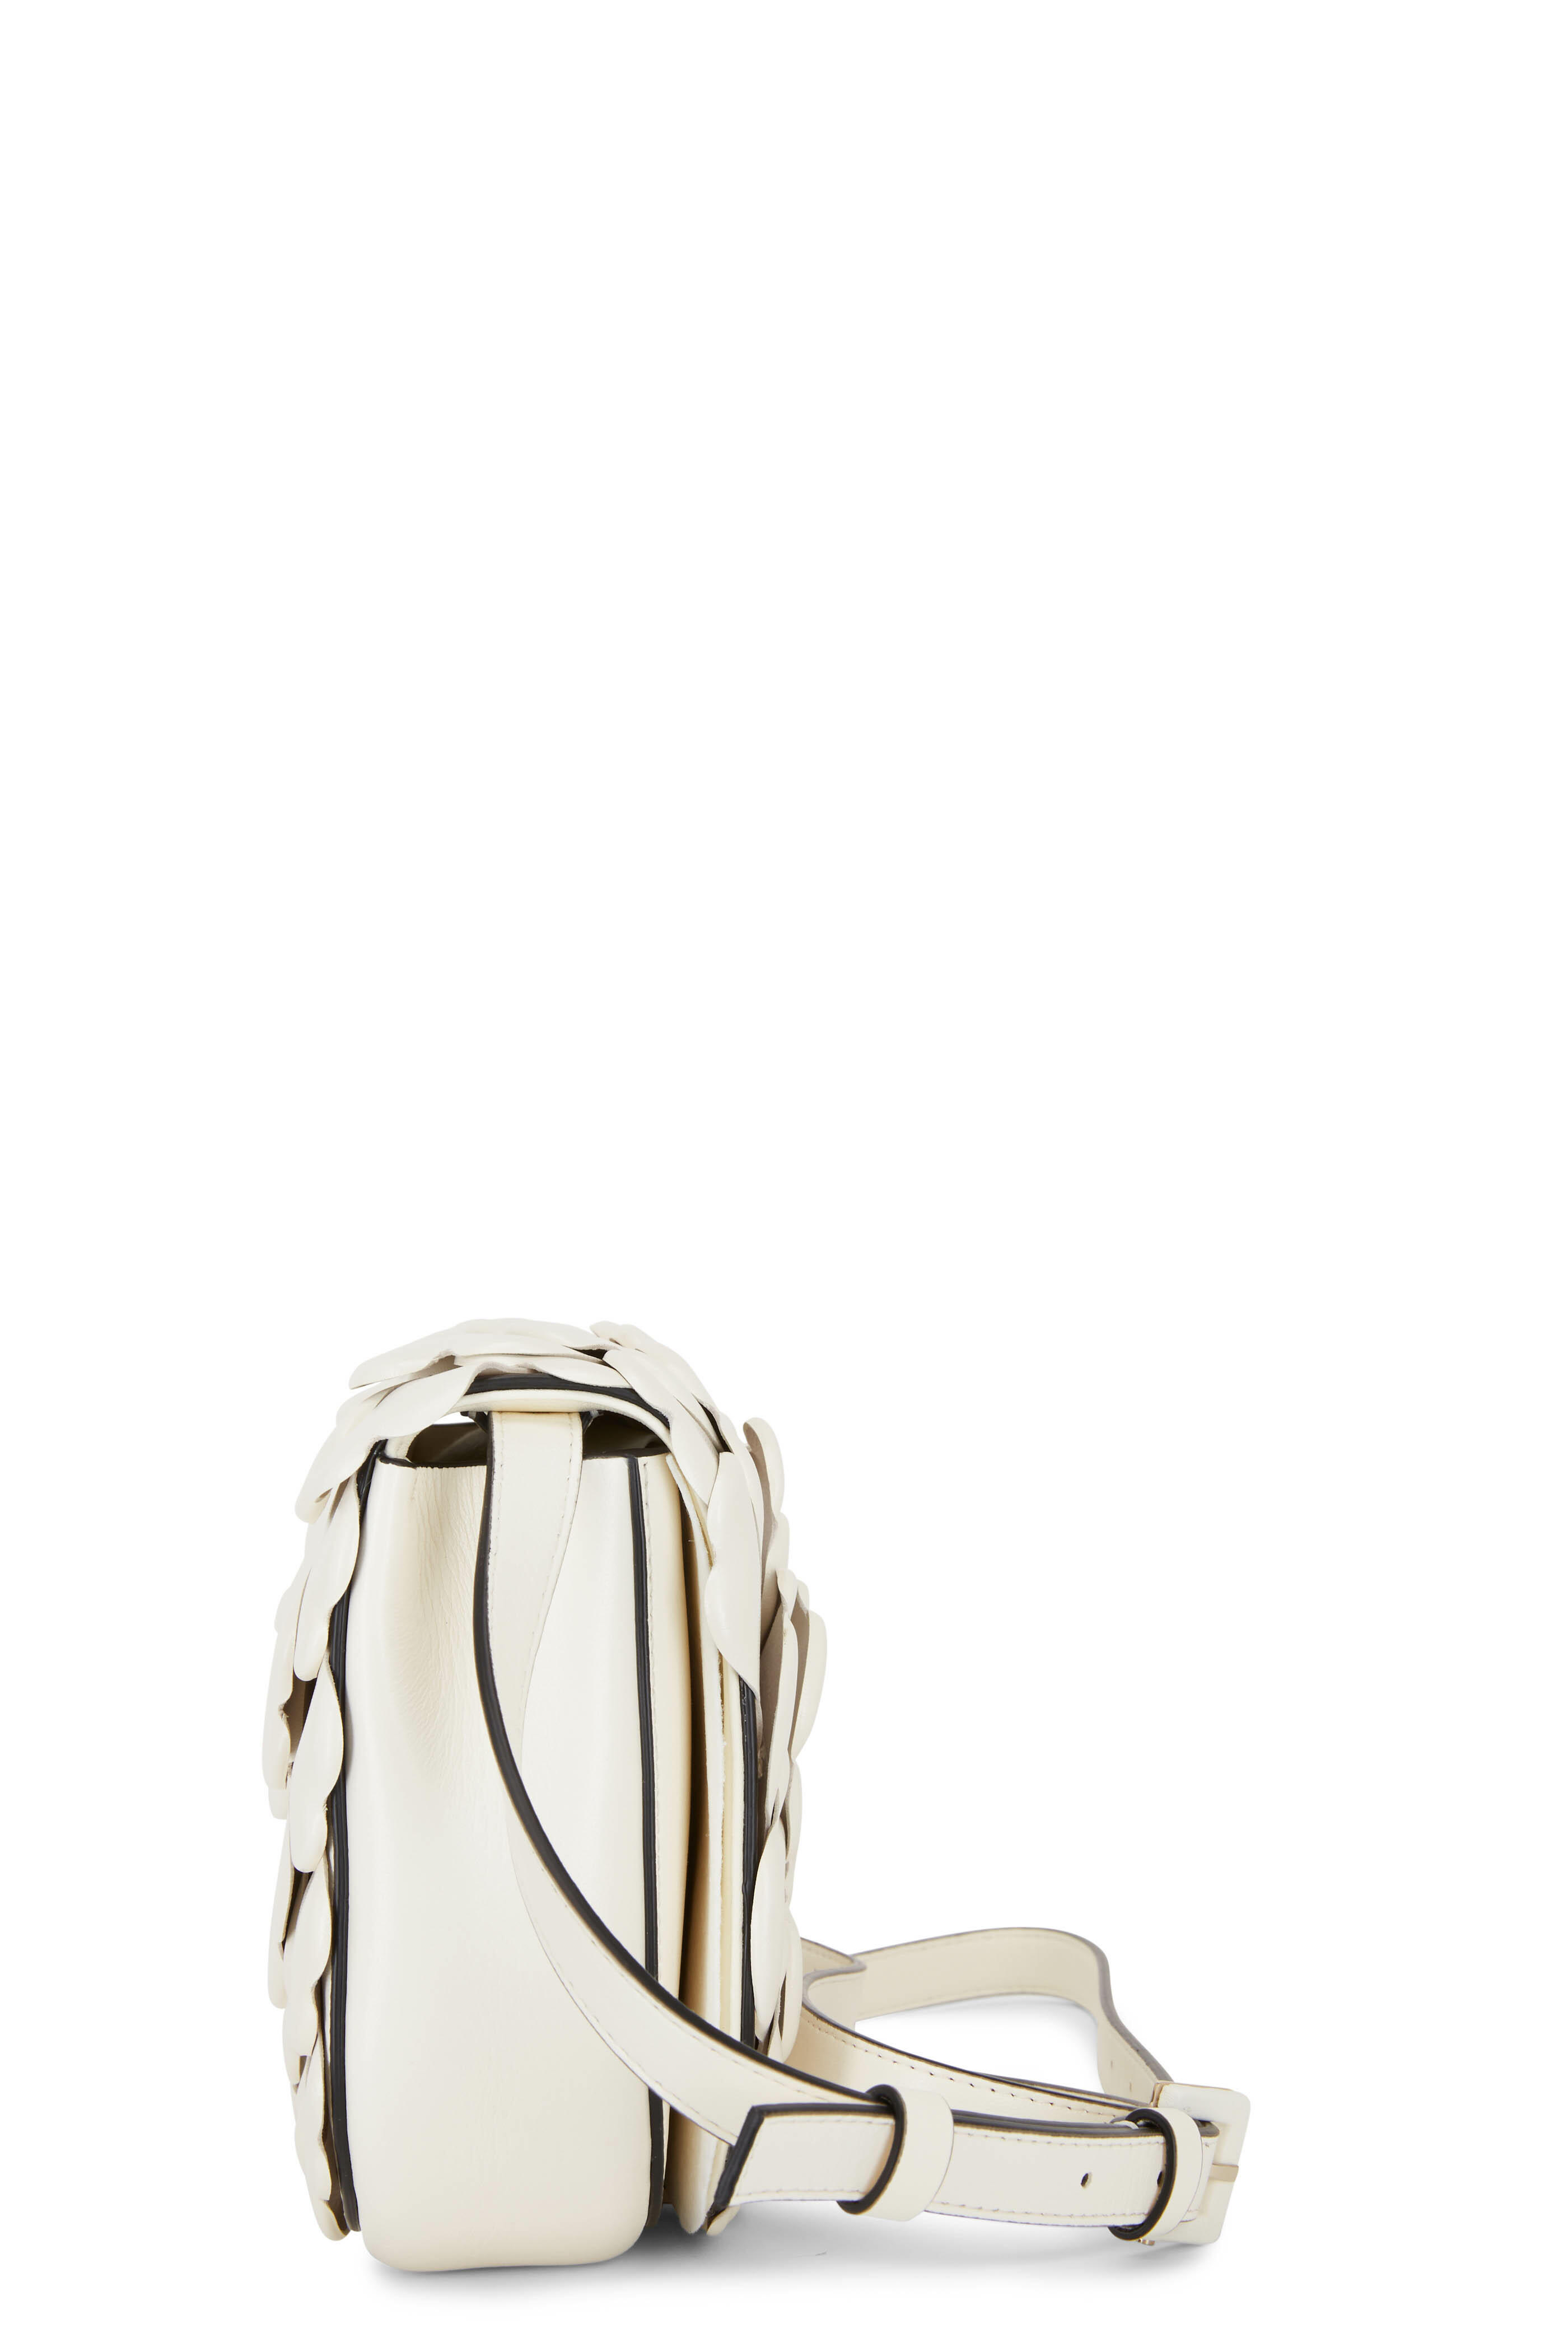 Valentino Garavani - Atelier Ivory Leather Rose Small Shoulder Bag